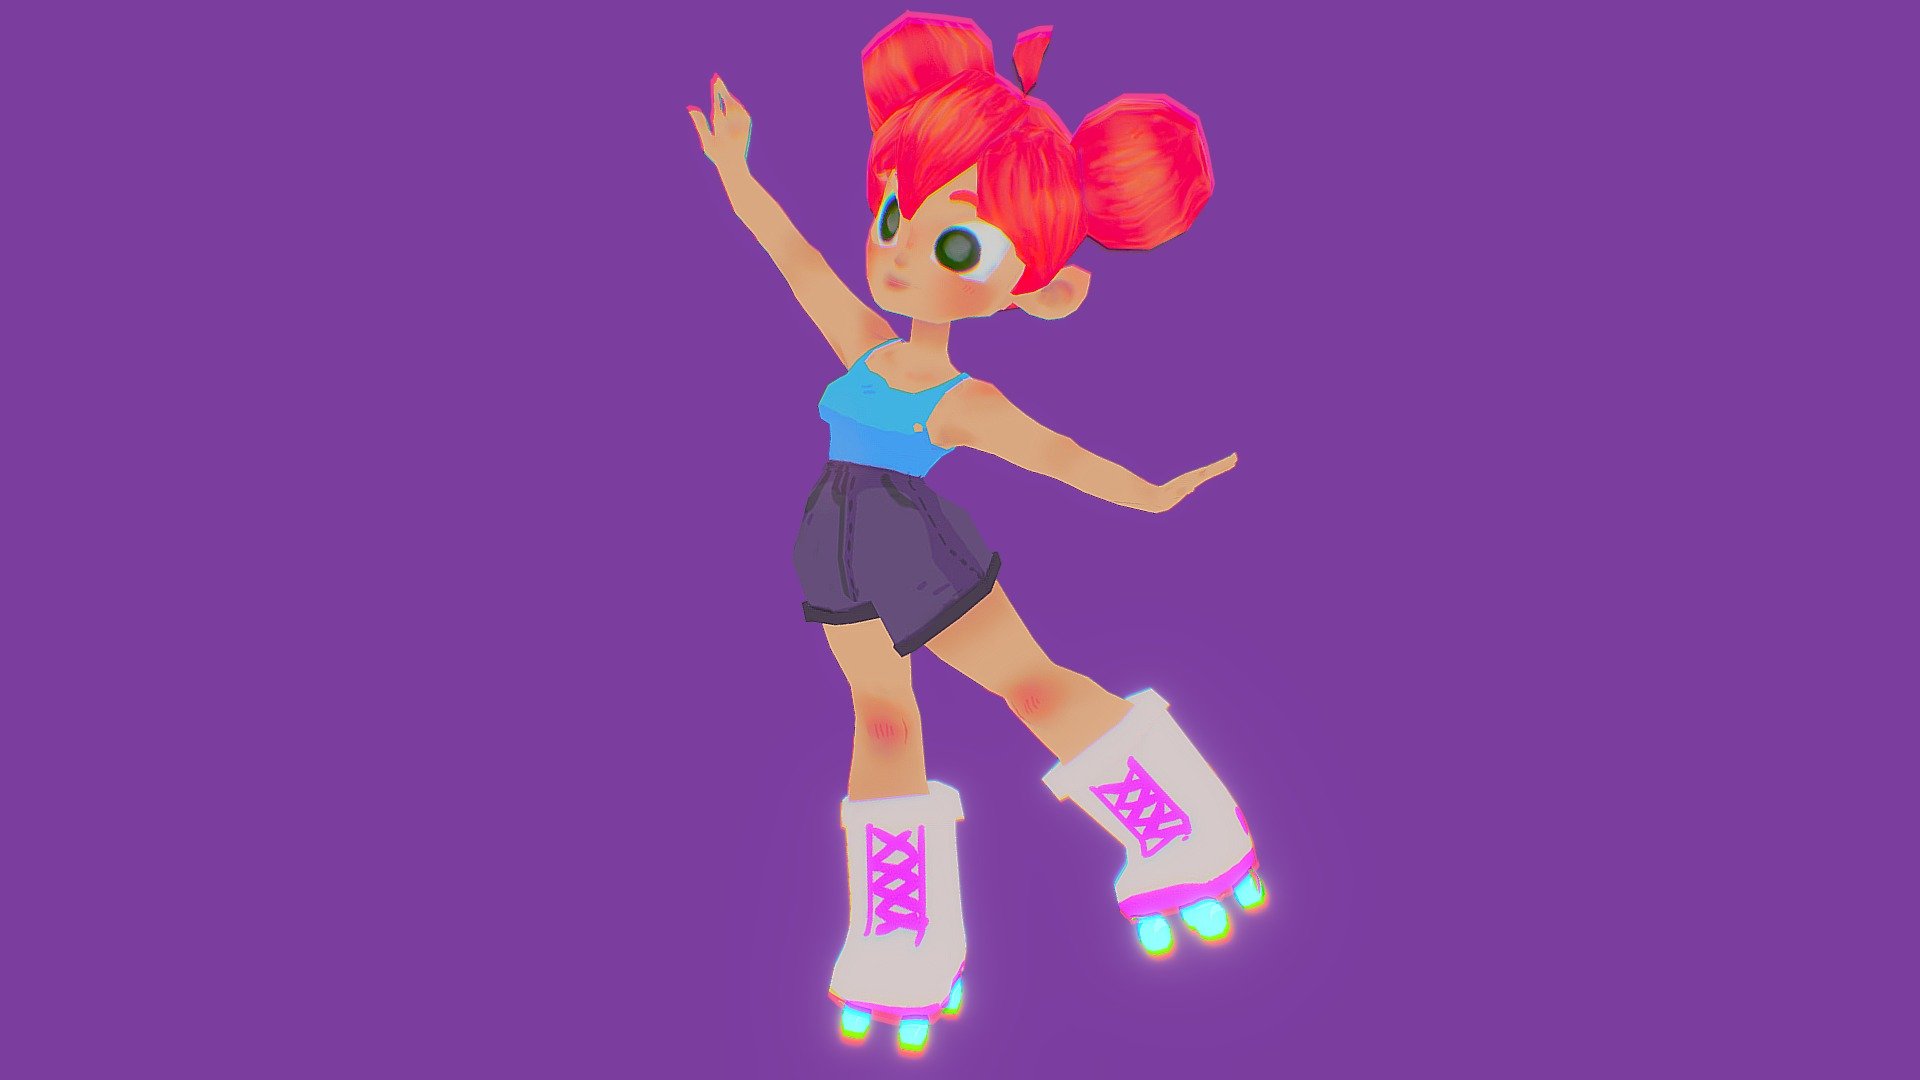 Homework, original character - Roller skater girl - 3D model by Citlalli.Siordia 3d model